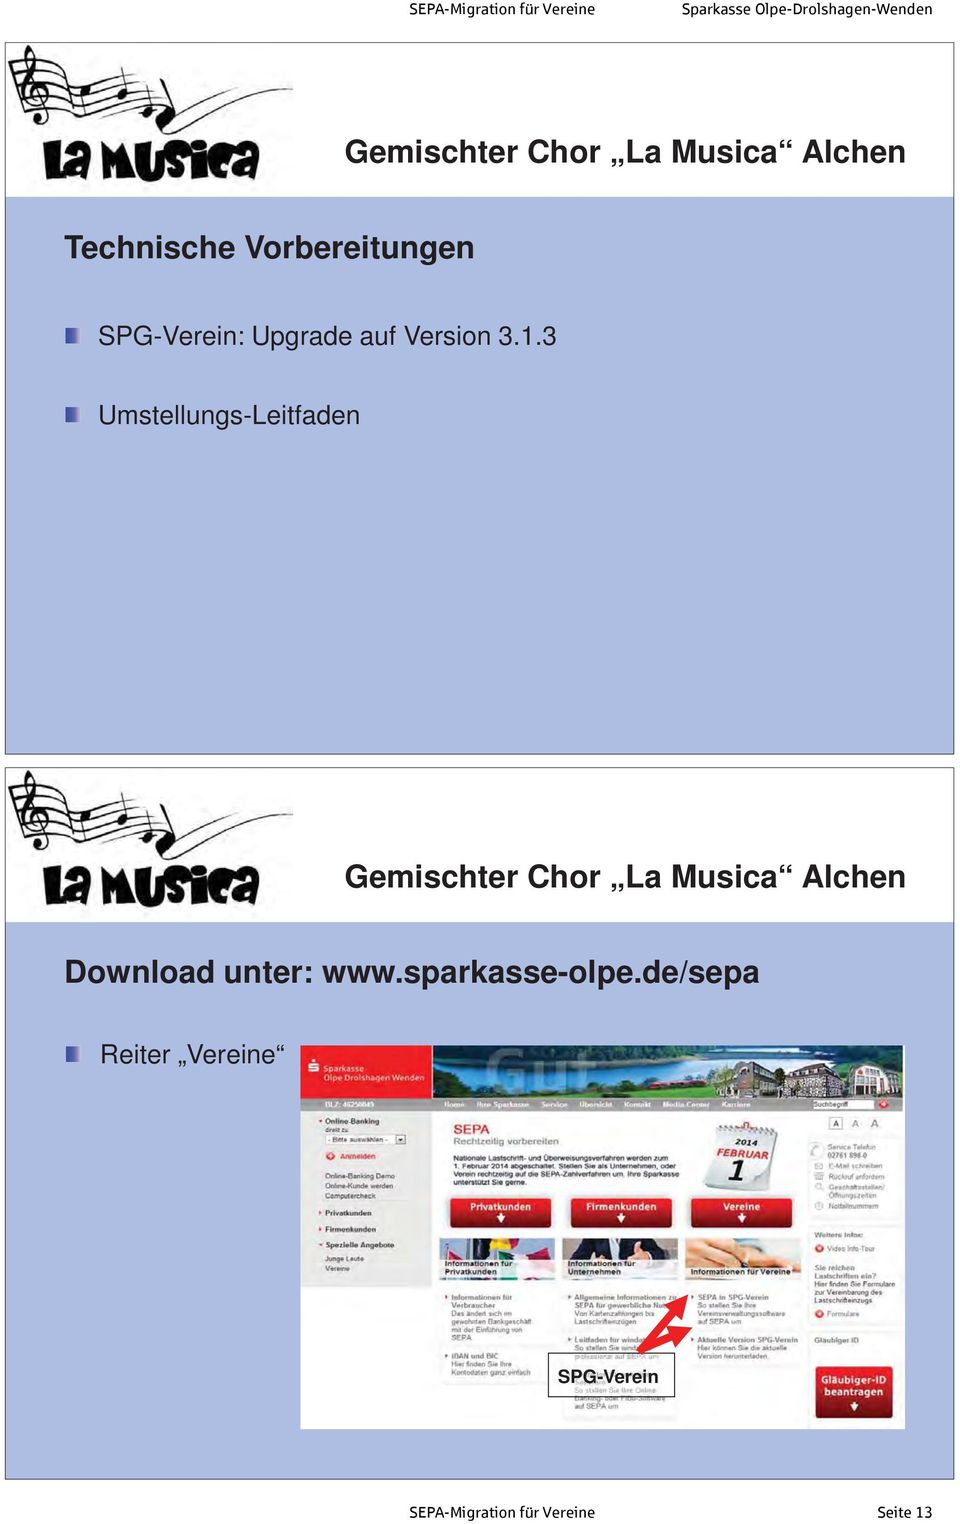 3 Umstellungs-Leitfaden Download unter: www.